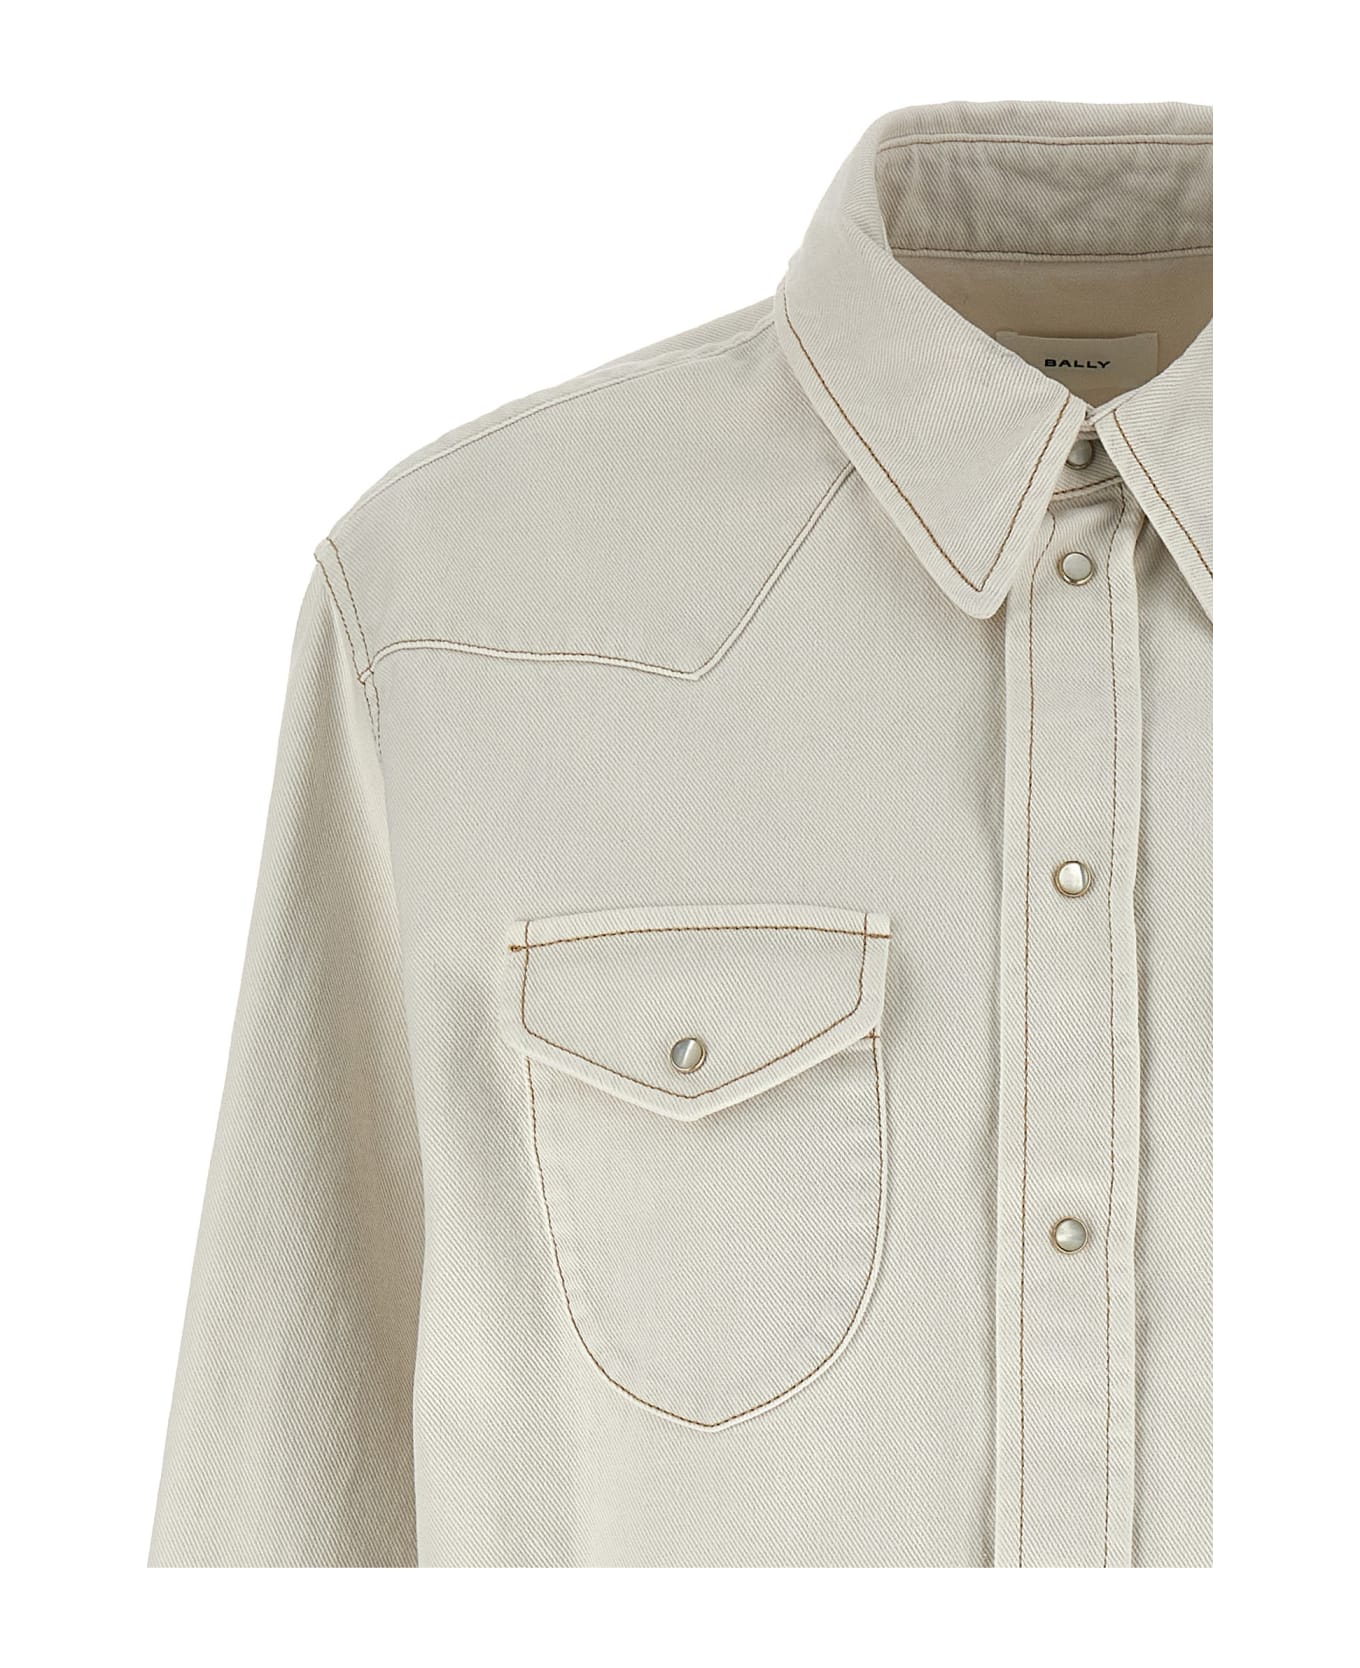 Bally Denim Shirt - White